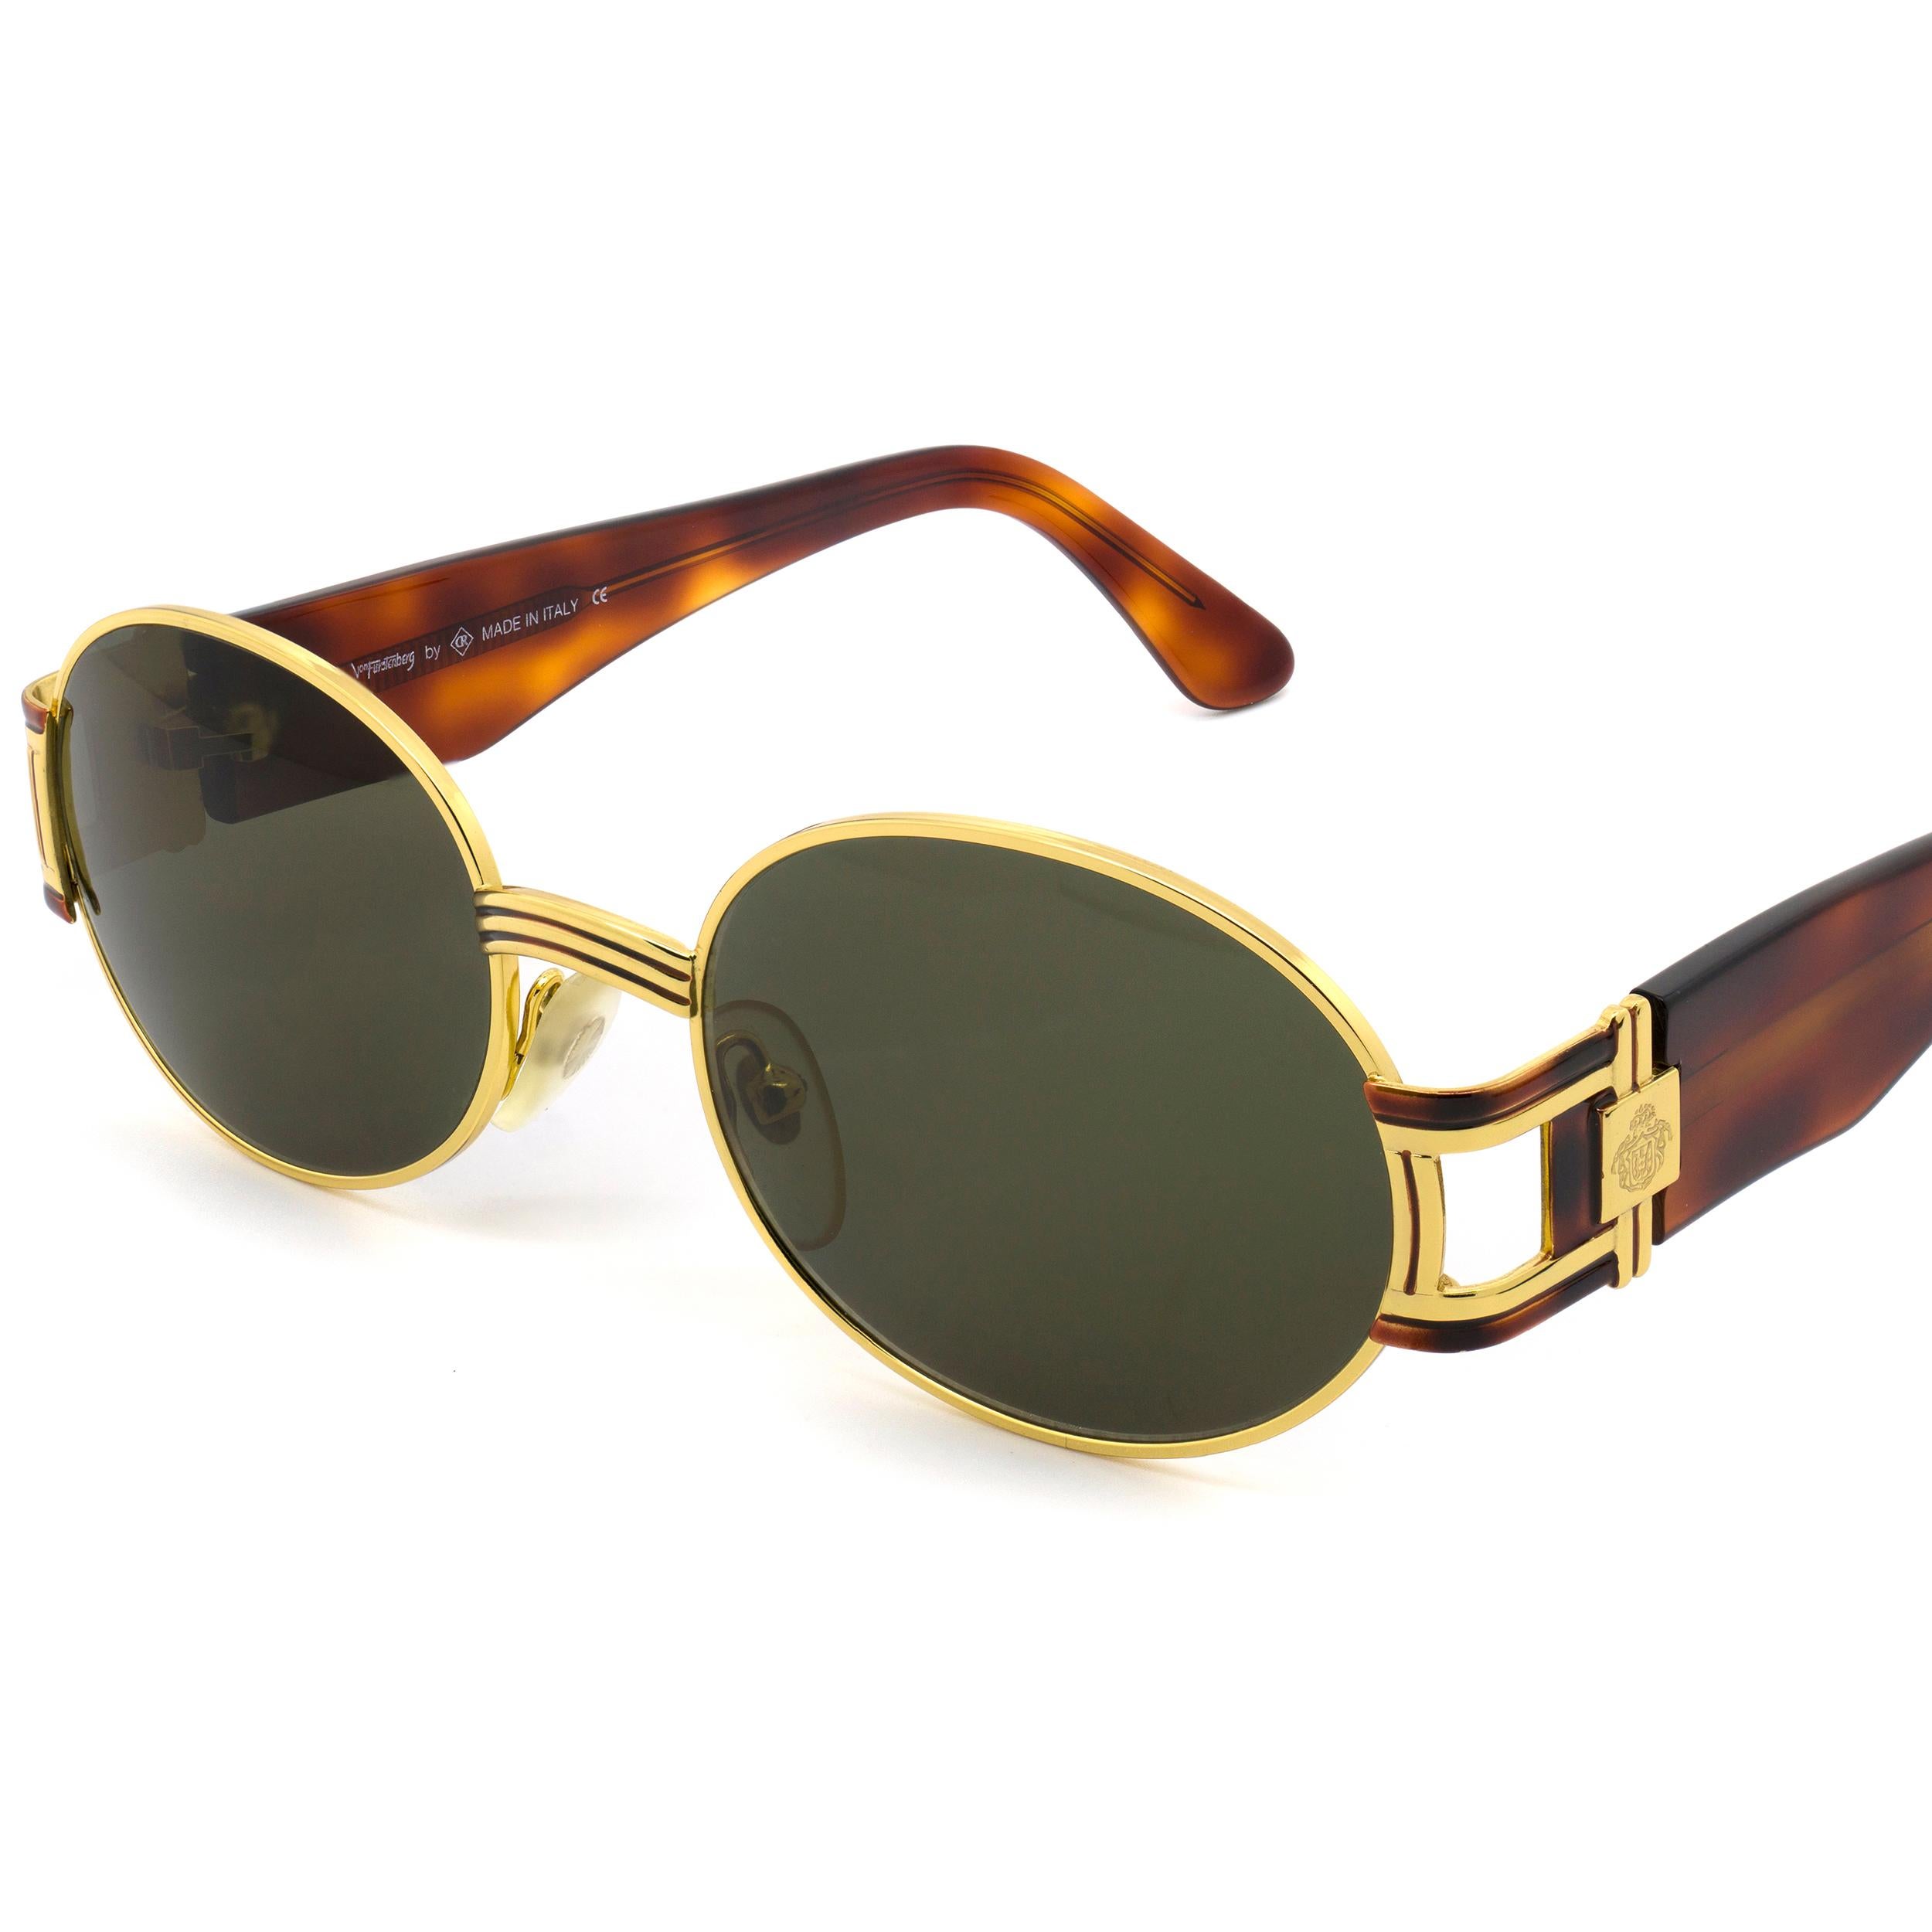 Prince Egon von Furstenberg round vintage sunglasses, Italy 80s In New Condition For Sale In Santa Clarita, CA